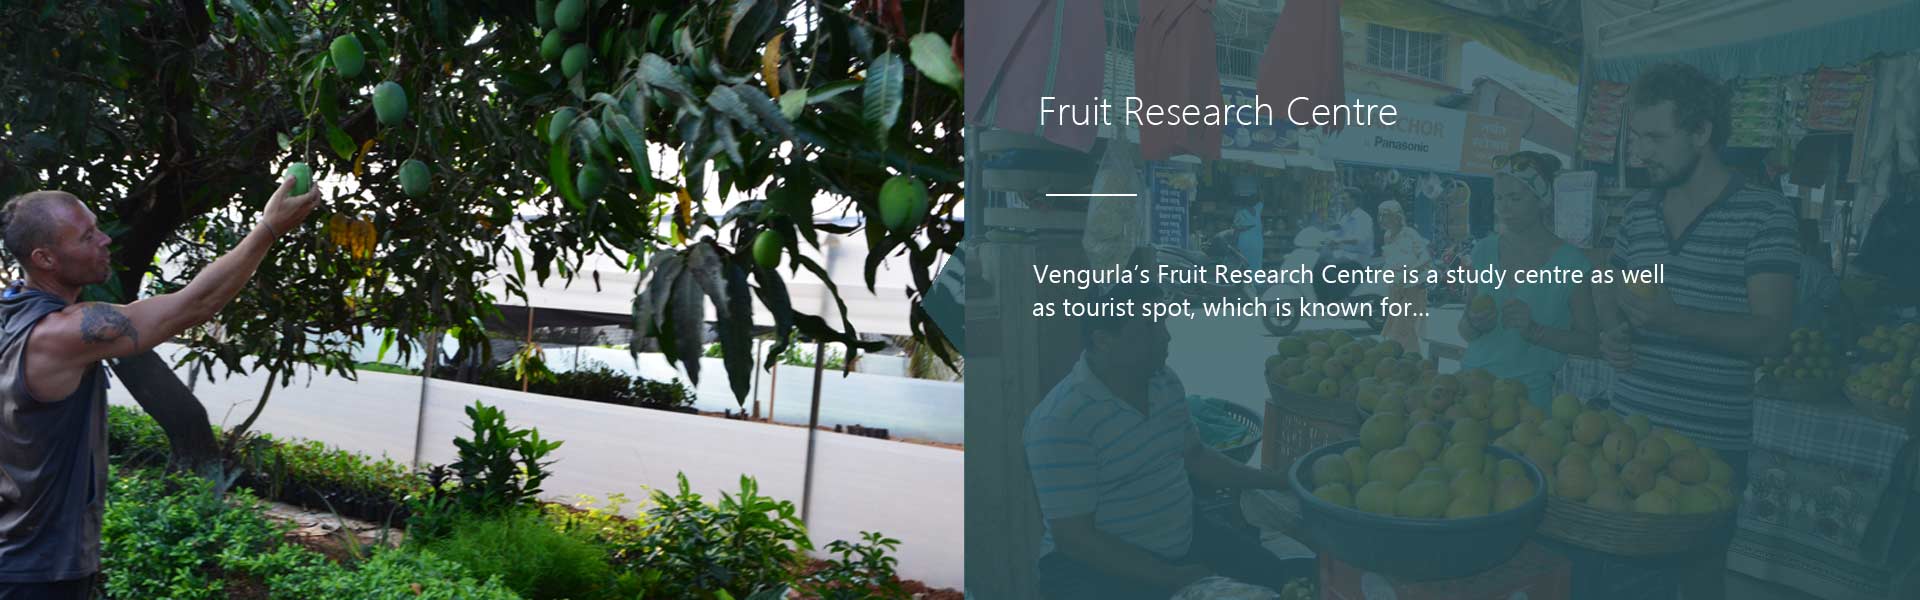 Fruit Research Center in Vengurla